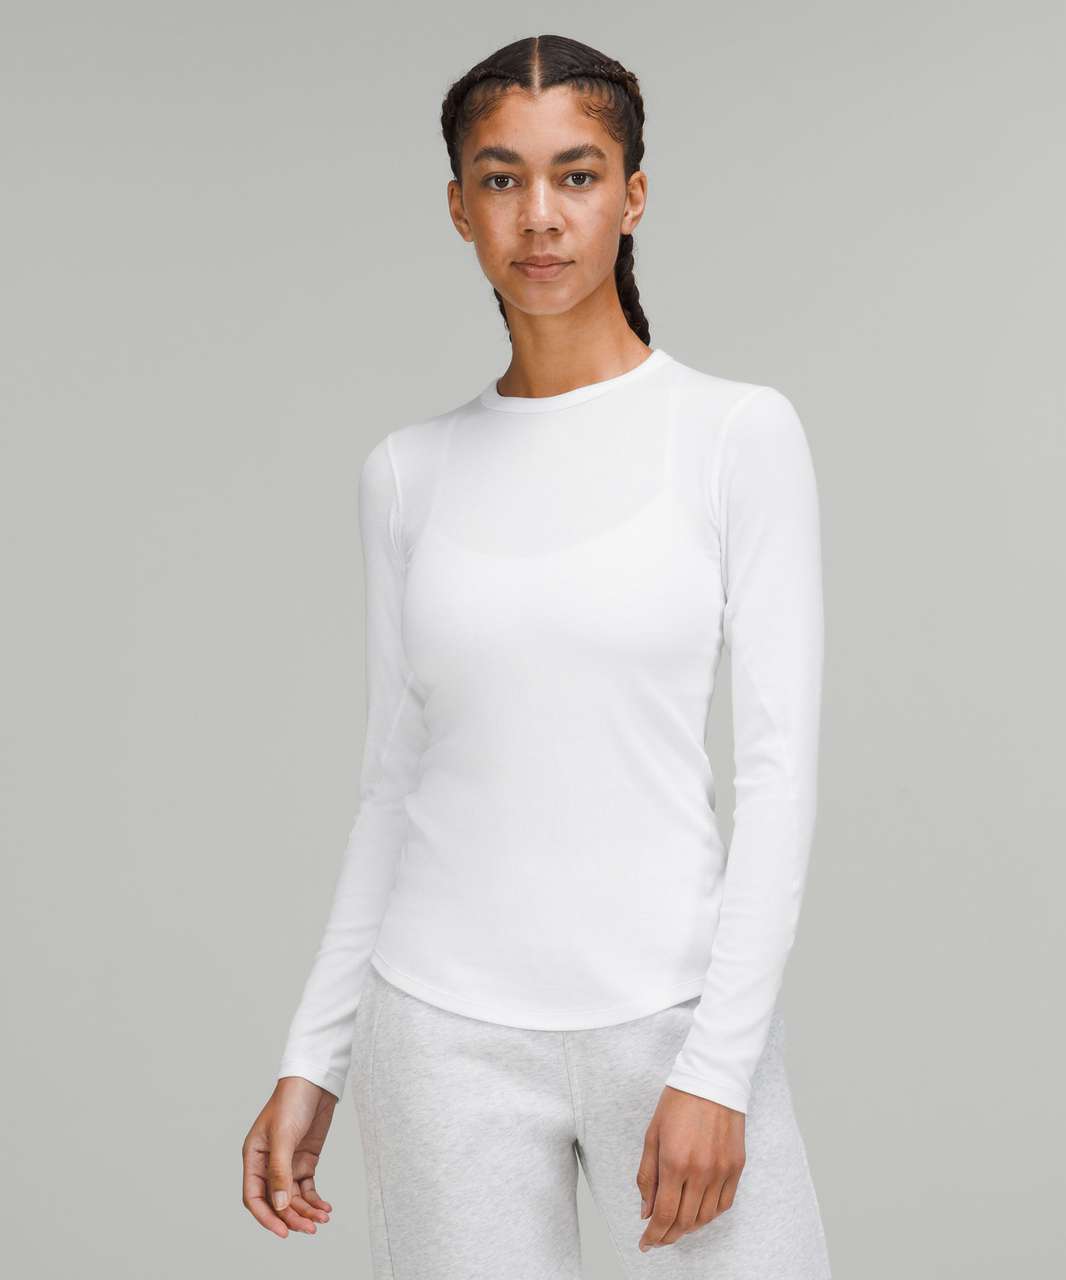 https://storage.googleapis.com/lulu-fanatics/product/77264/1280/lululemon-hold-tight-long-sleeve-shirt-white-0002-411463.jpg